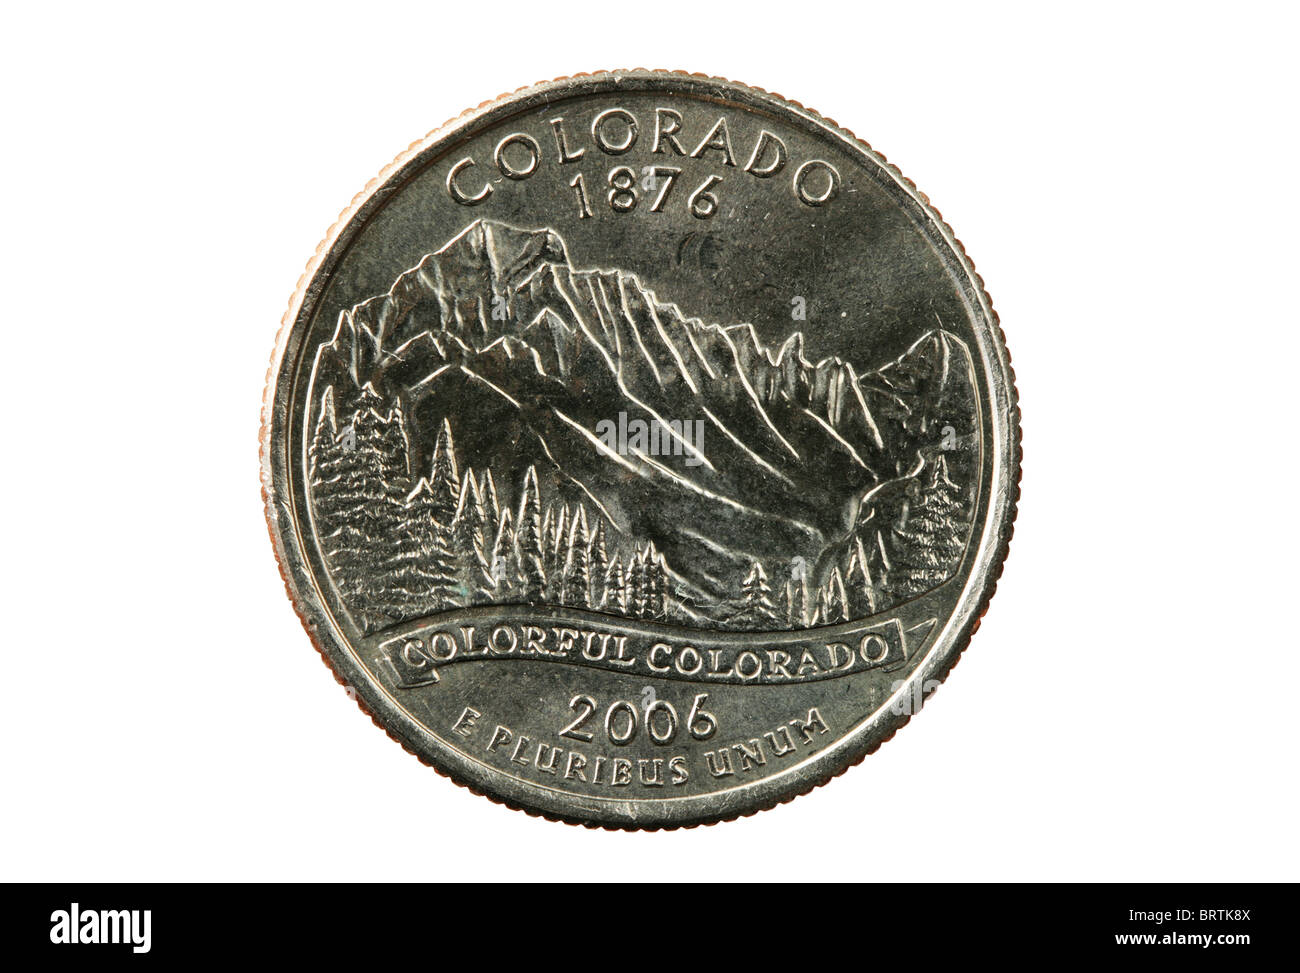 Colorado state quarter isolated on white background Stock Photo